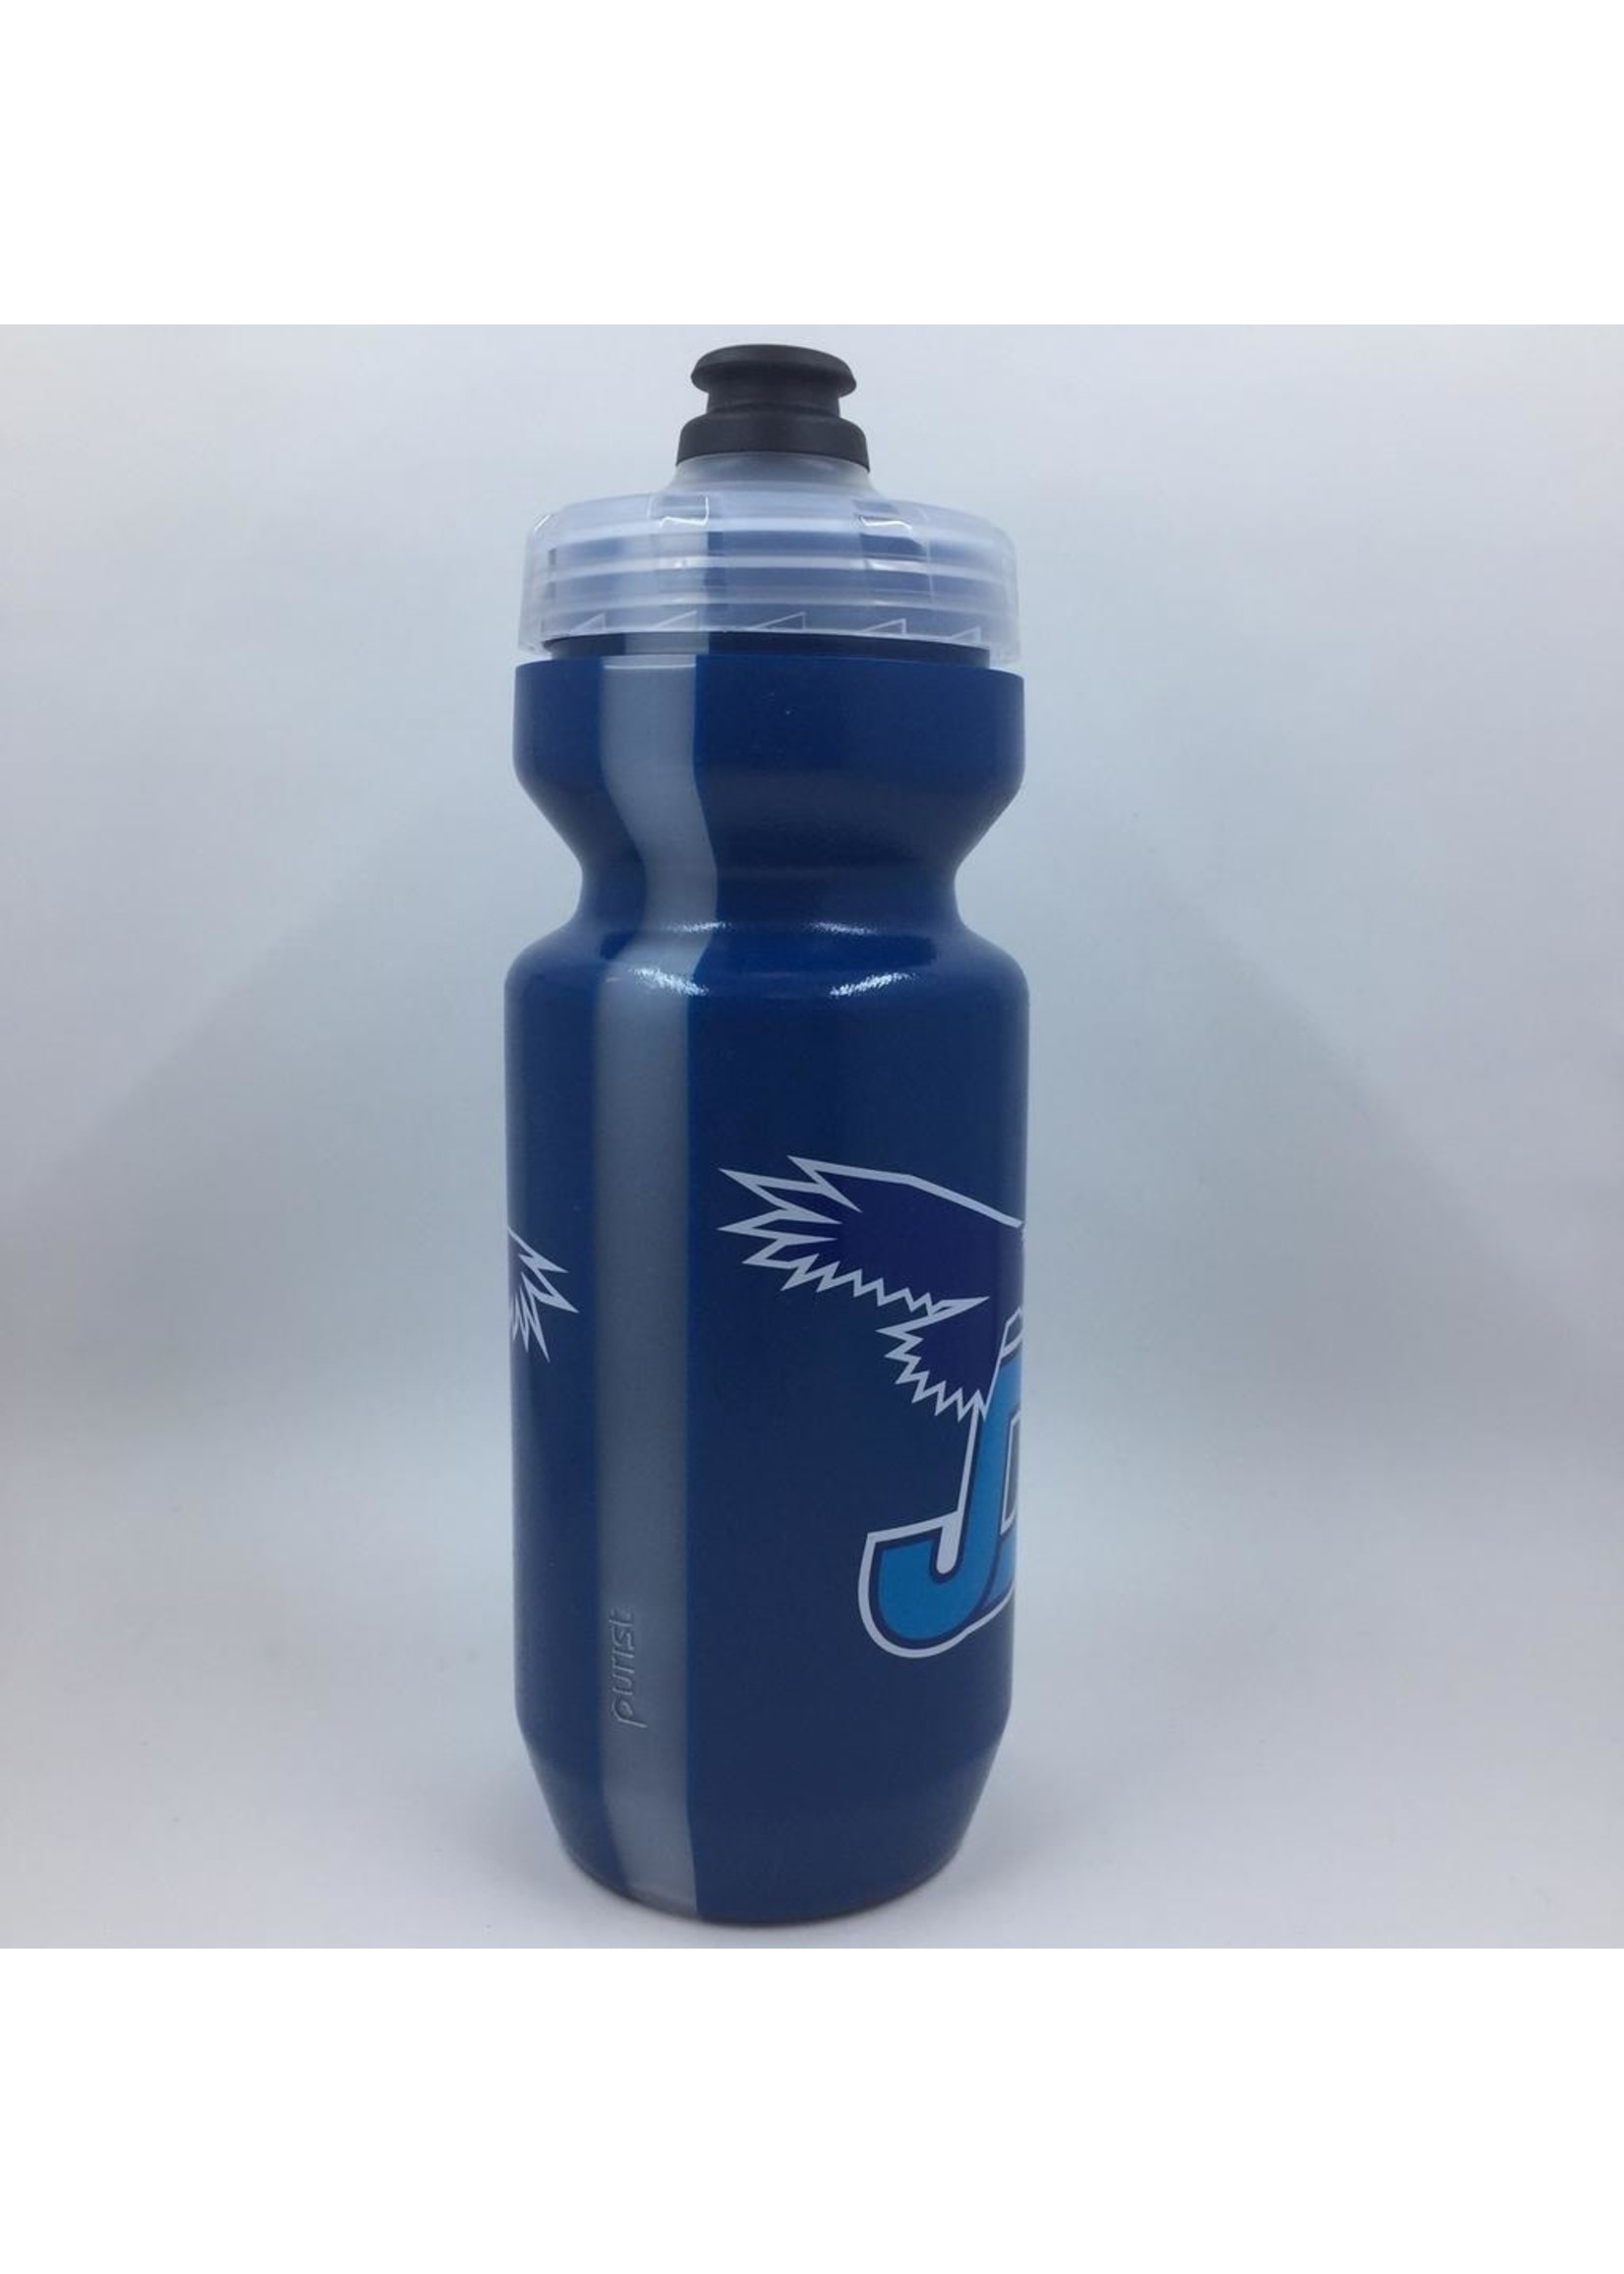 NON-UNIFORM Beverage - JD Water bottle, blue